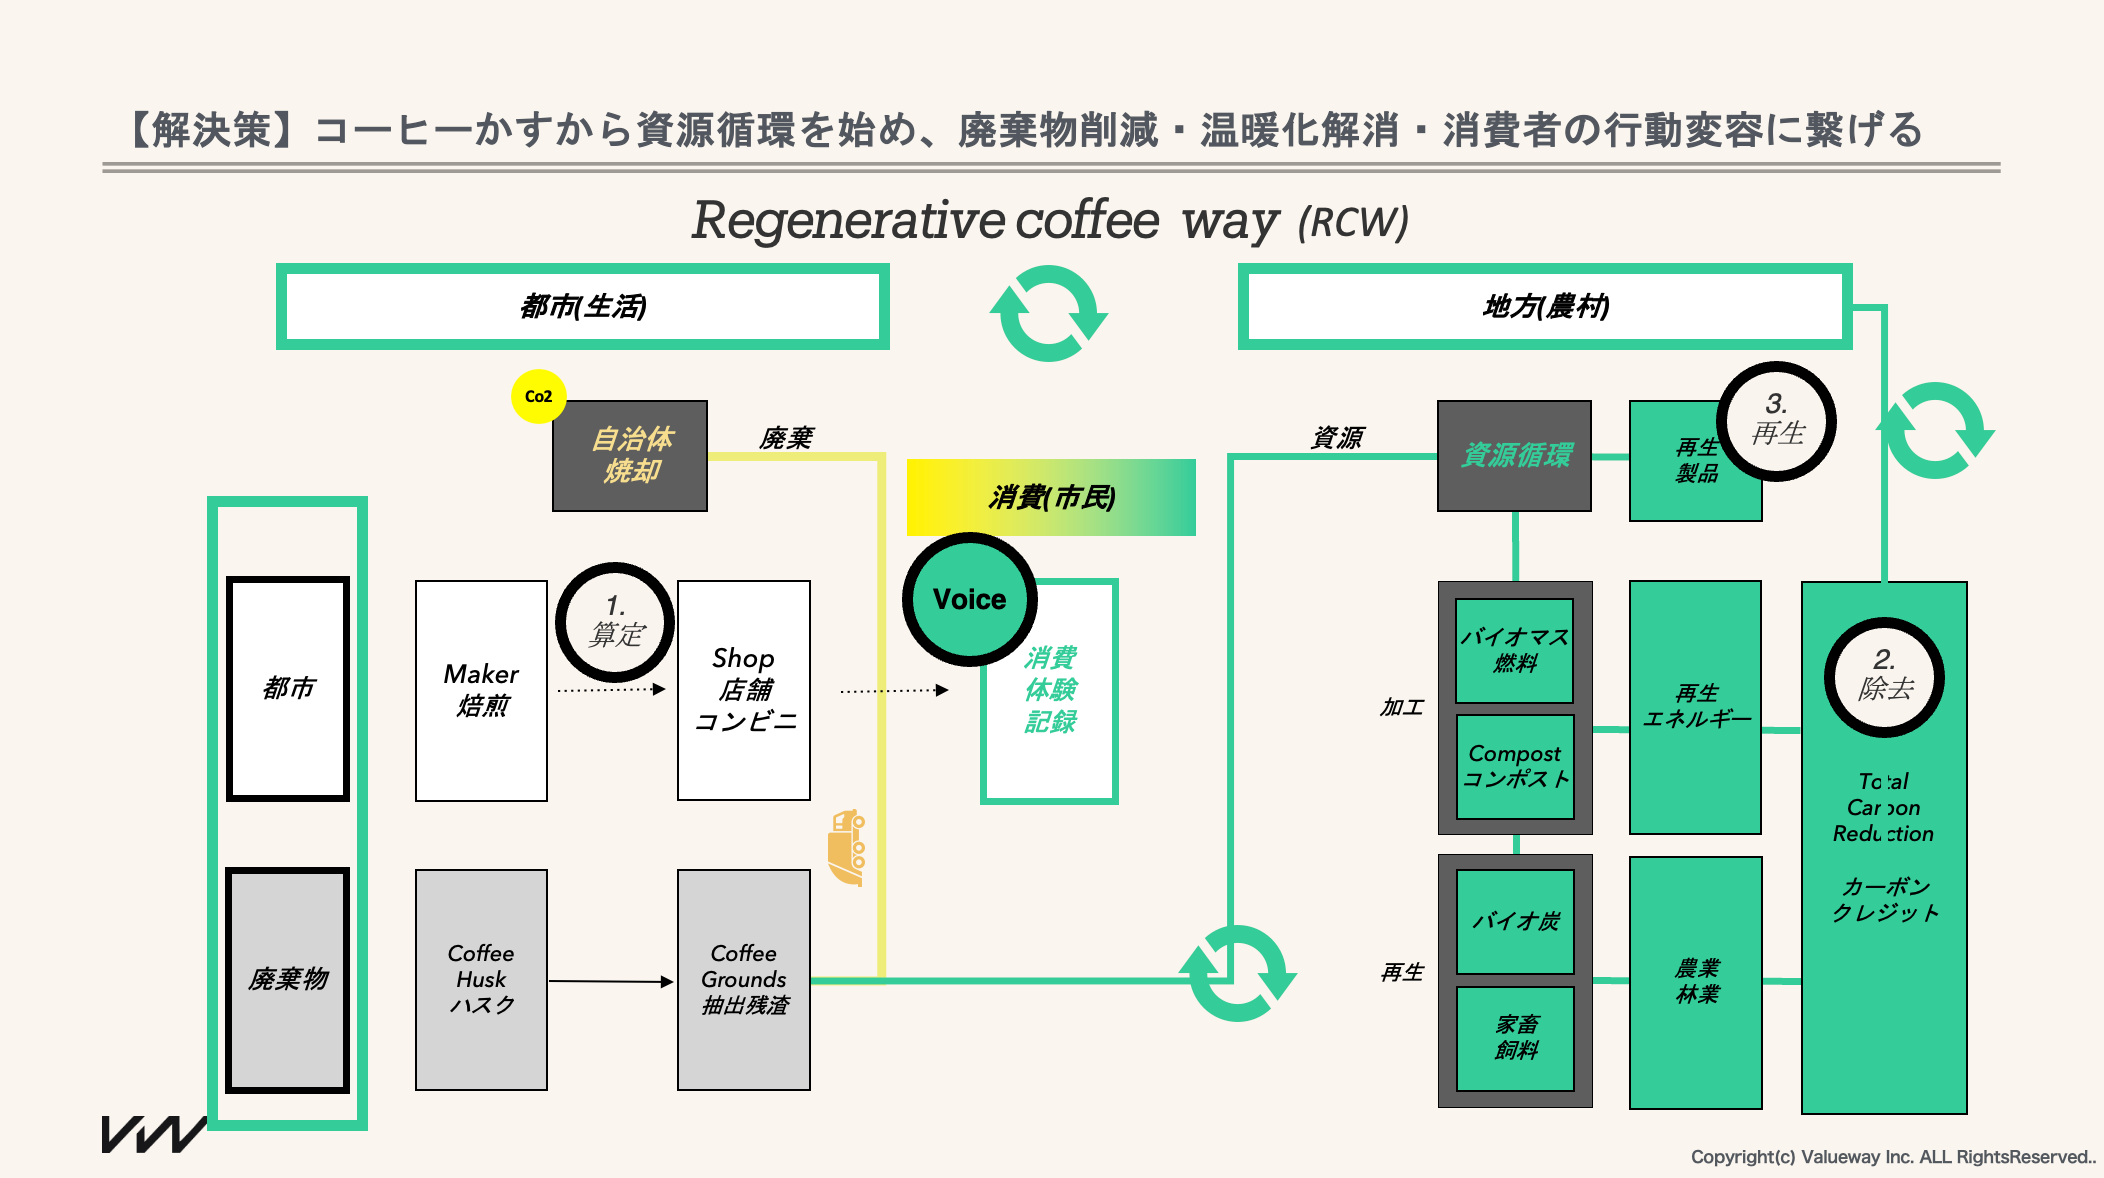 TOKYO SUTEAM 官民共創型アクセラレーションプログラムにValue wayがファイナリスト選出